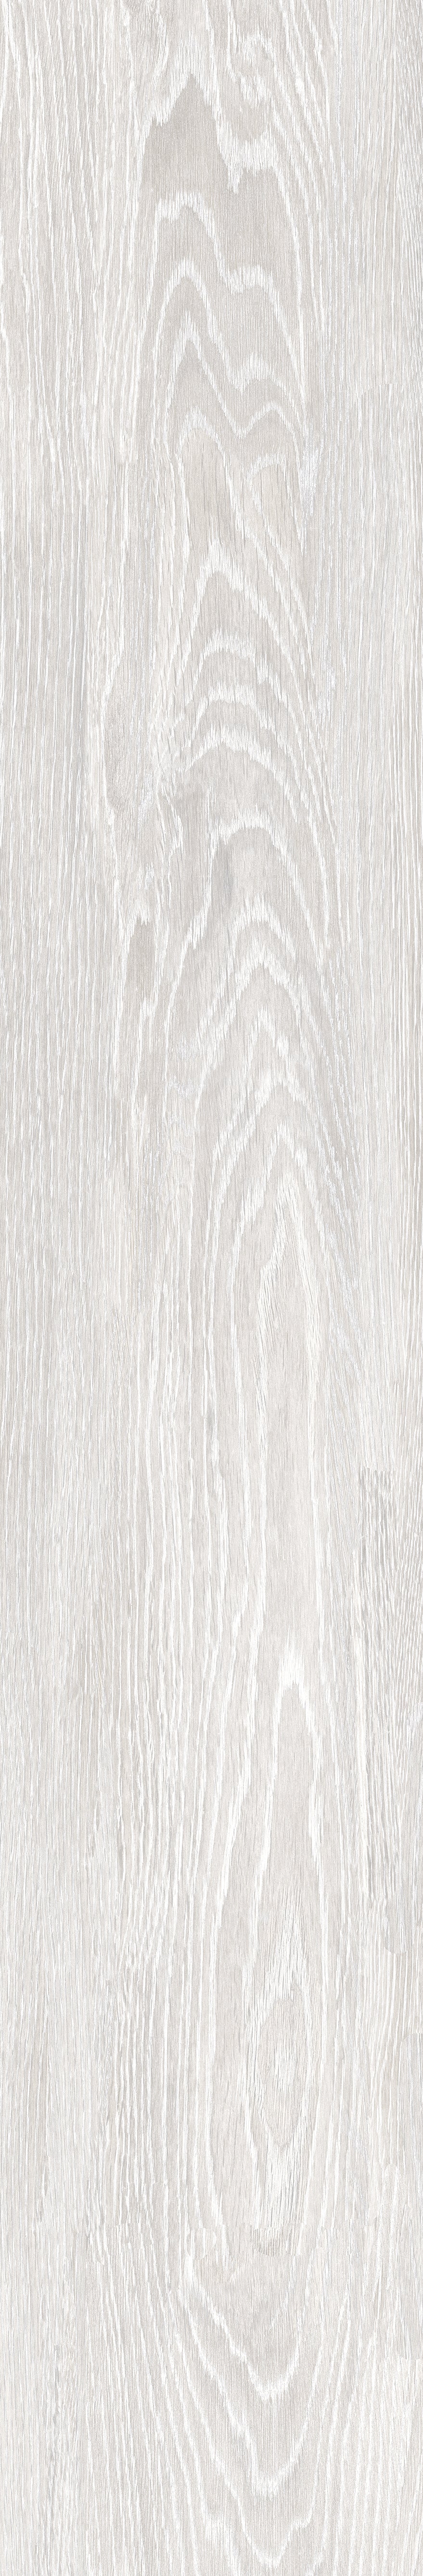 Giania 木紋磚 Bm122801m